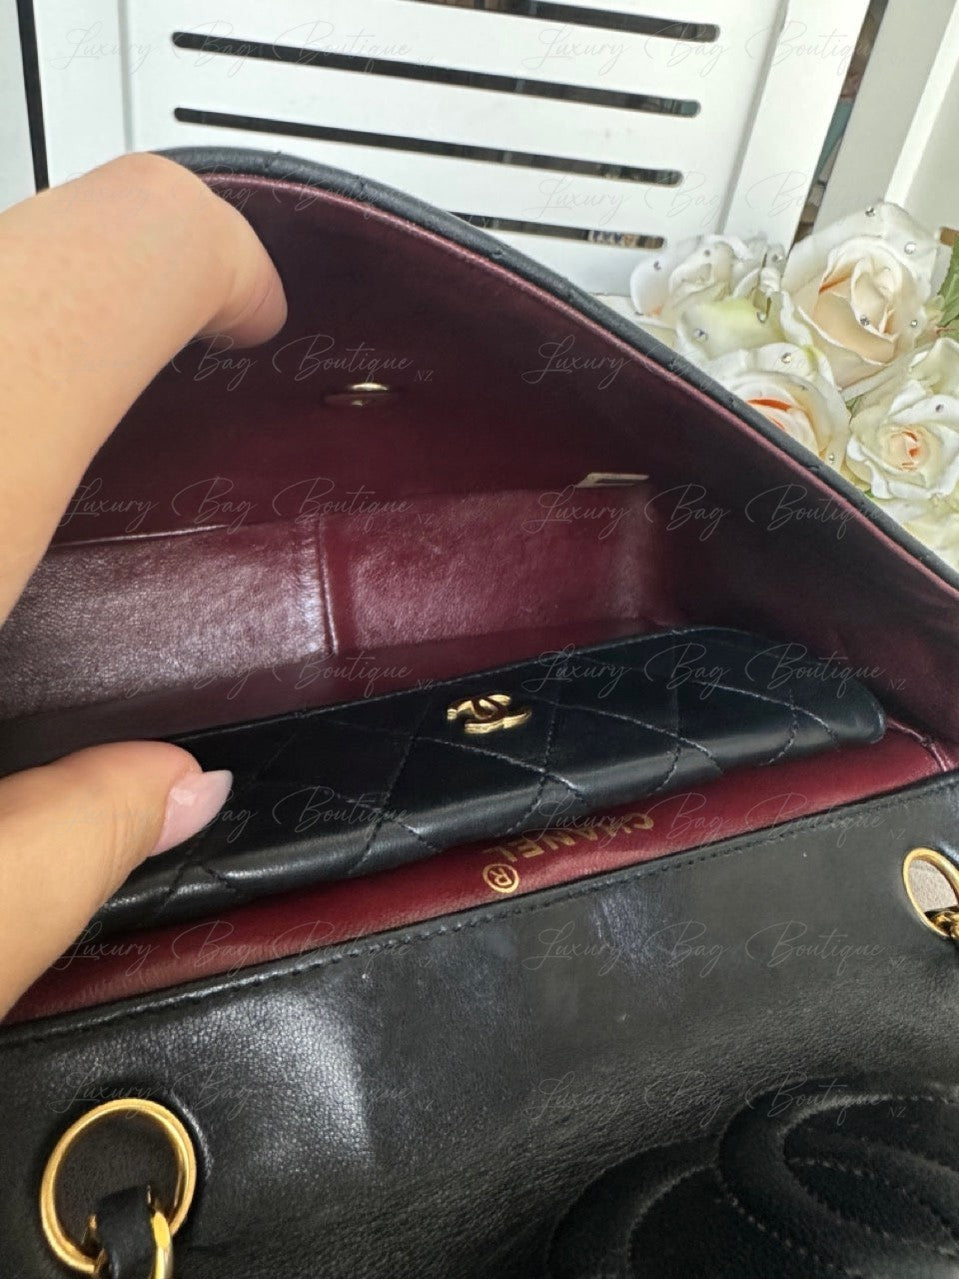 Chanel Vintage Flap w Removable Pouch